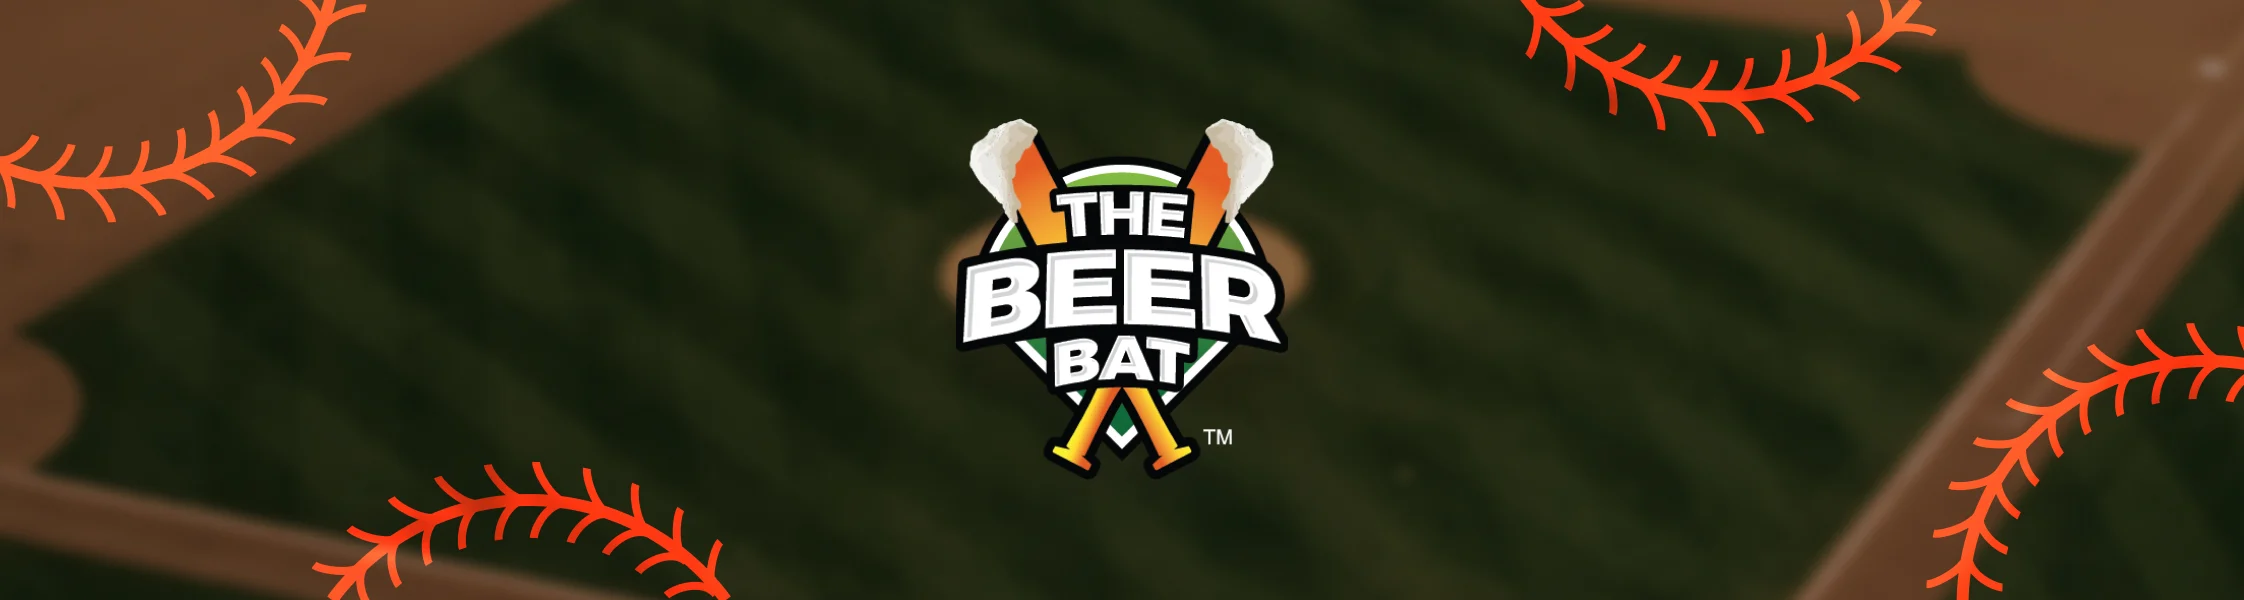 https://cms-wp.bigcommerce.com/wp-content/uploads/2022/09/5100CD_The-Beer-Bat_Header.jpg